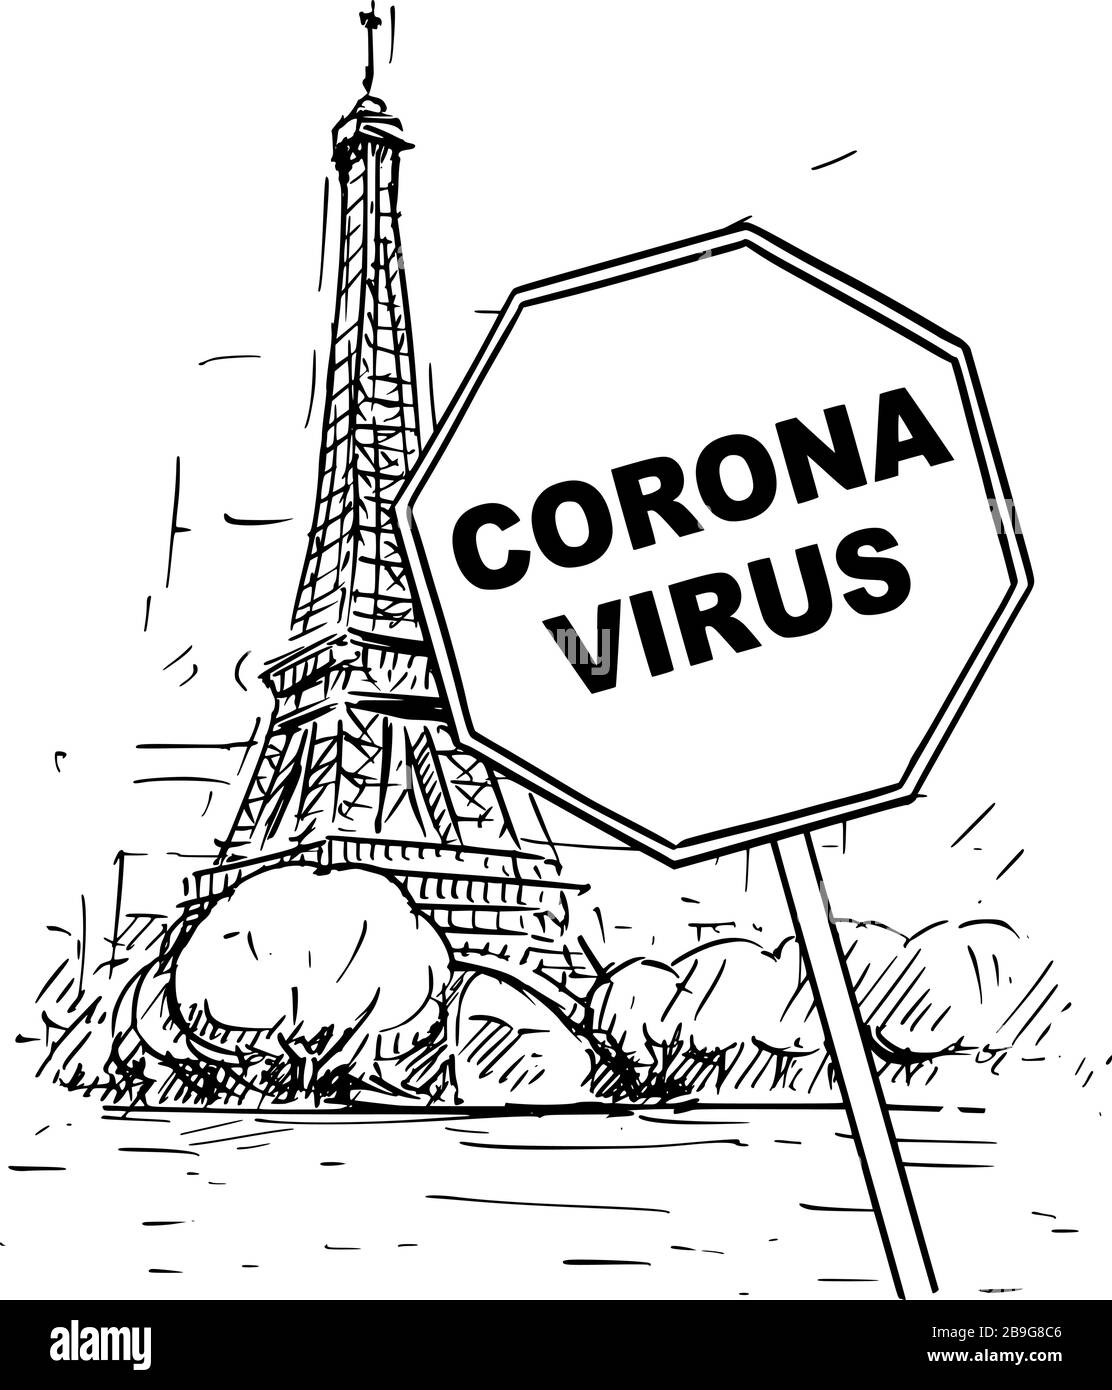 Vector cartoon sketchy rough illustration of Paris, France, Eiffel Tower and Coronavirus covid-19 virus epidemic warning sign. Stock Vector